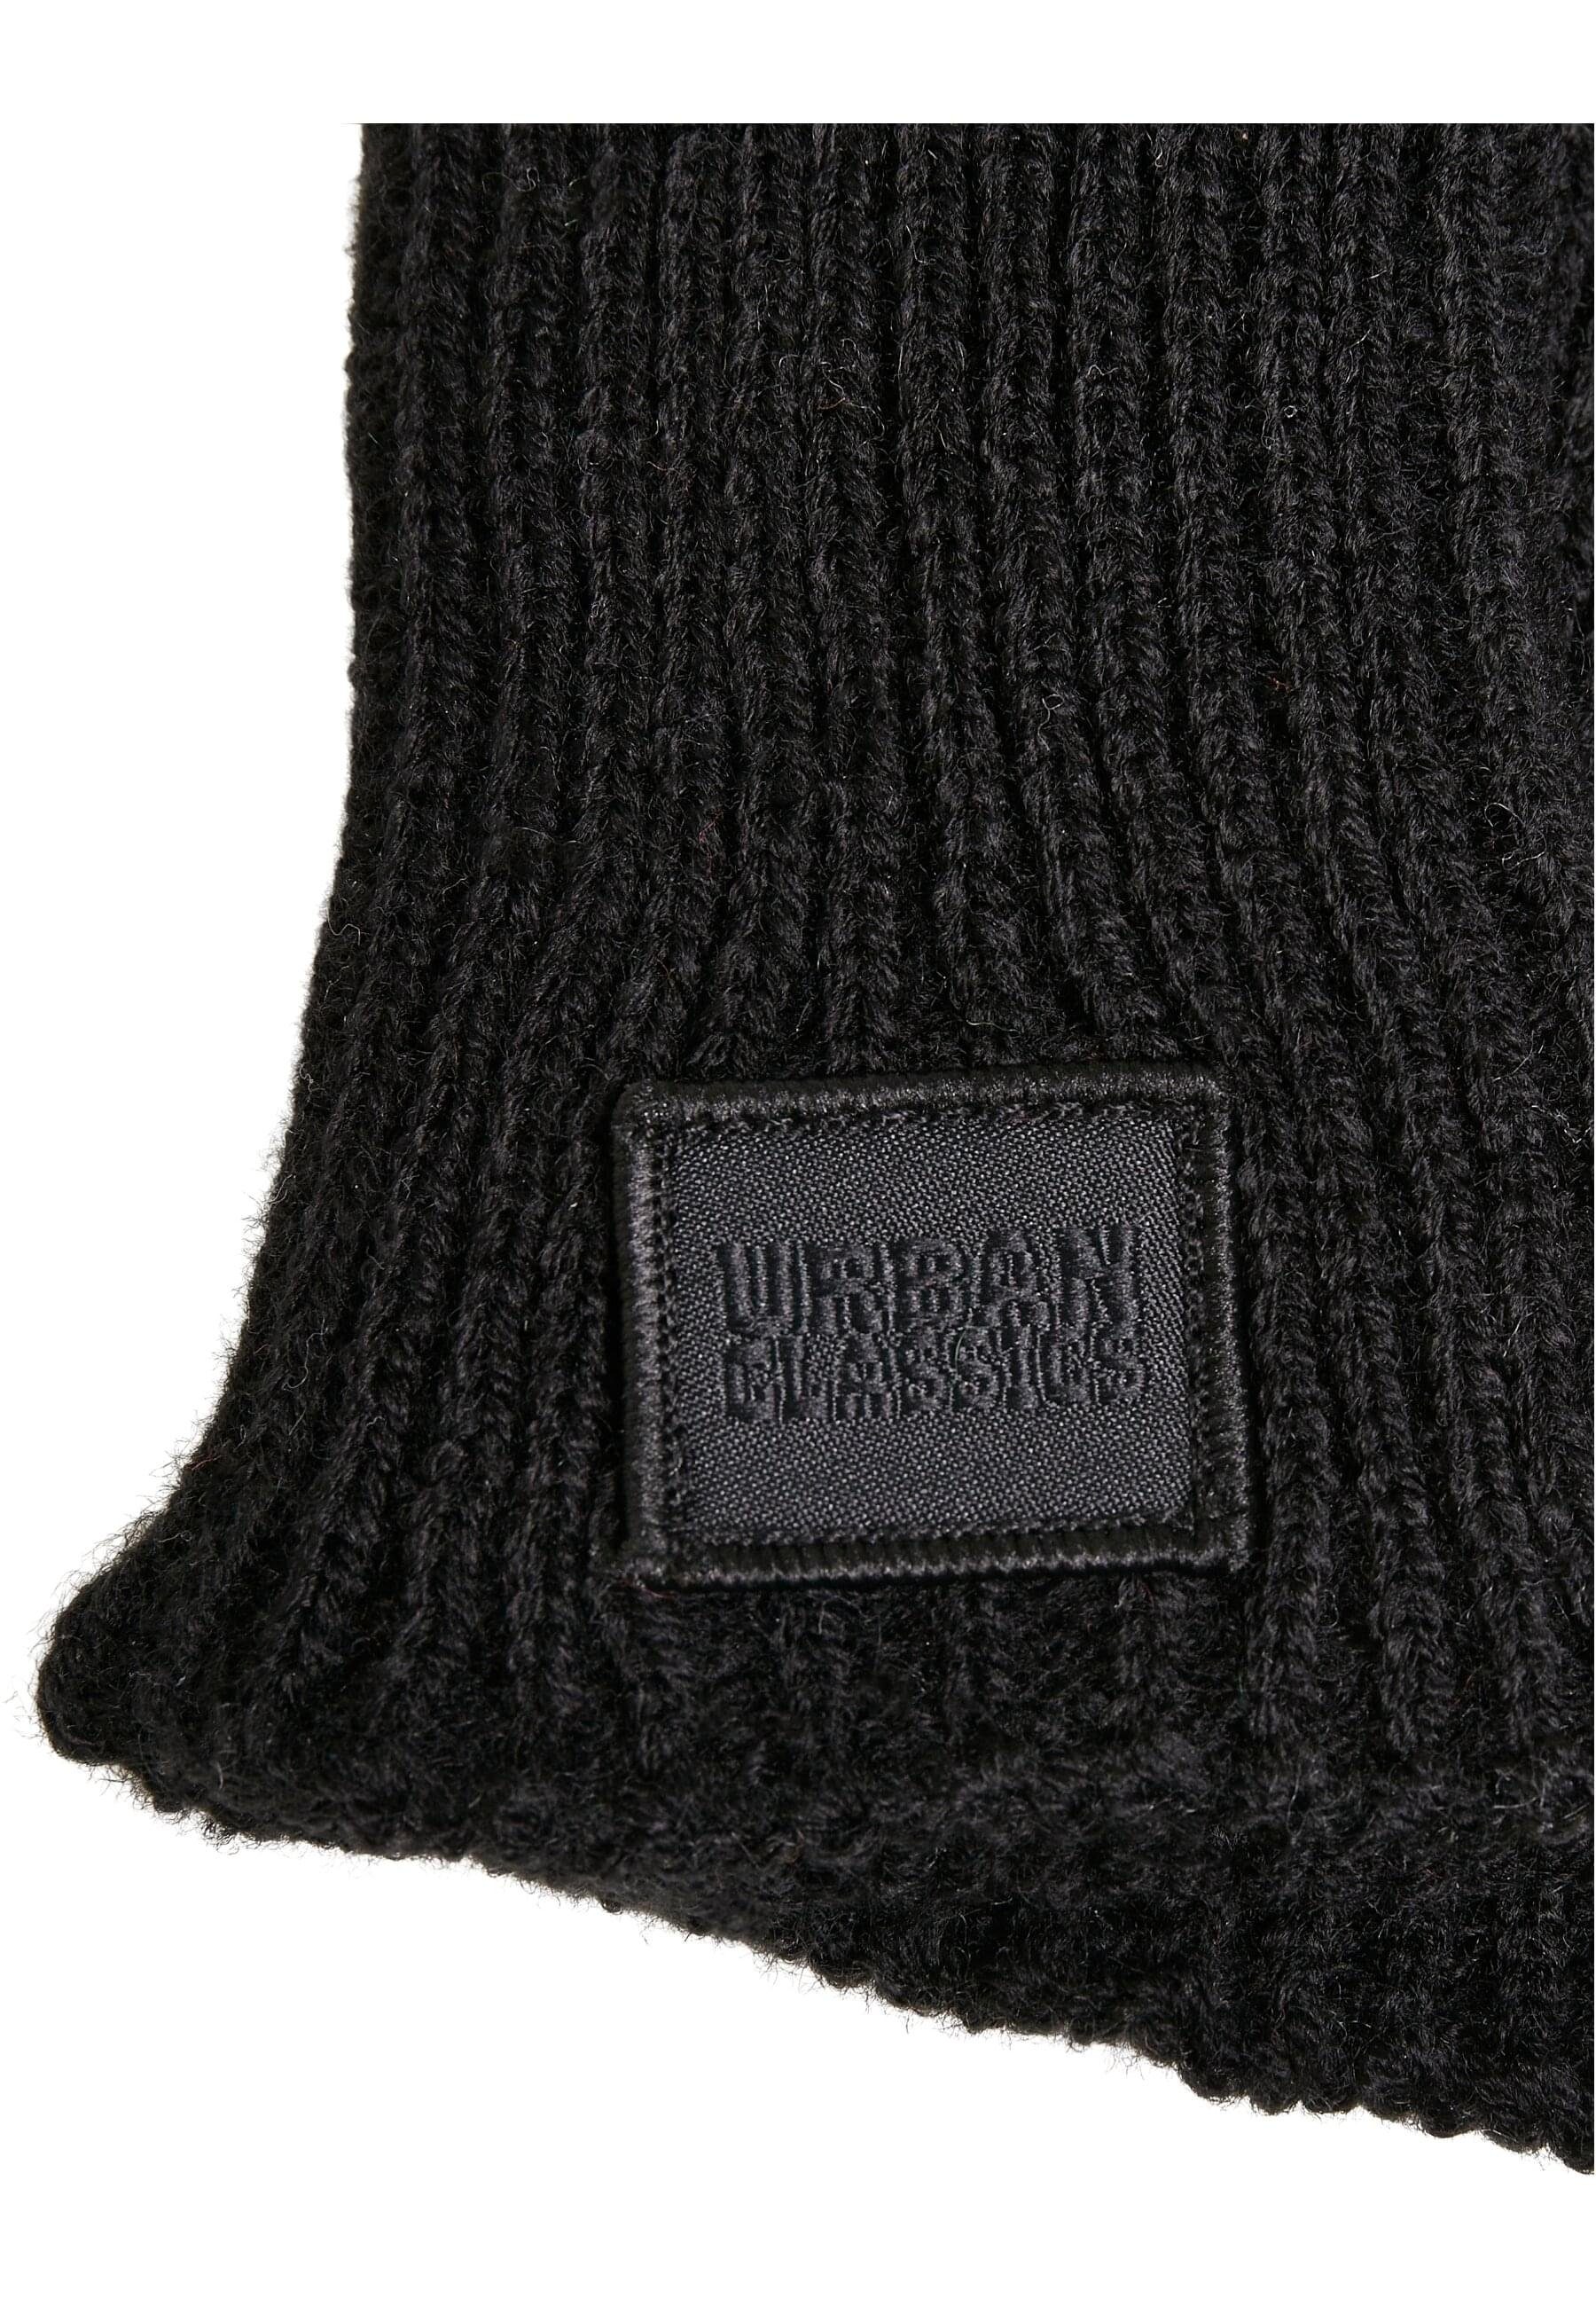 Gloves black Unisex URBAN Wool Mix Knitted CLASSICS Smart Baumwollhandschuhe